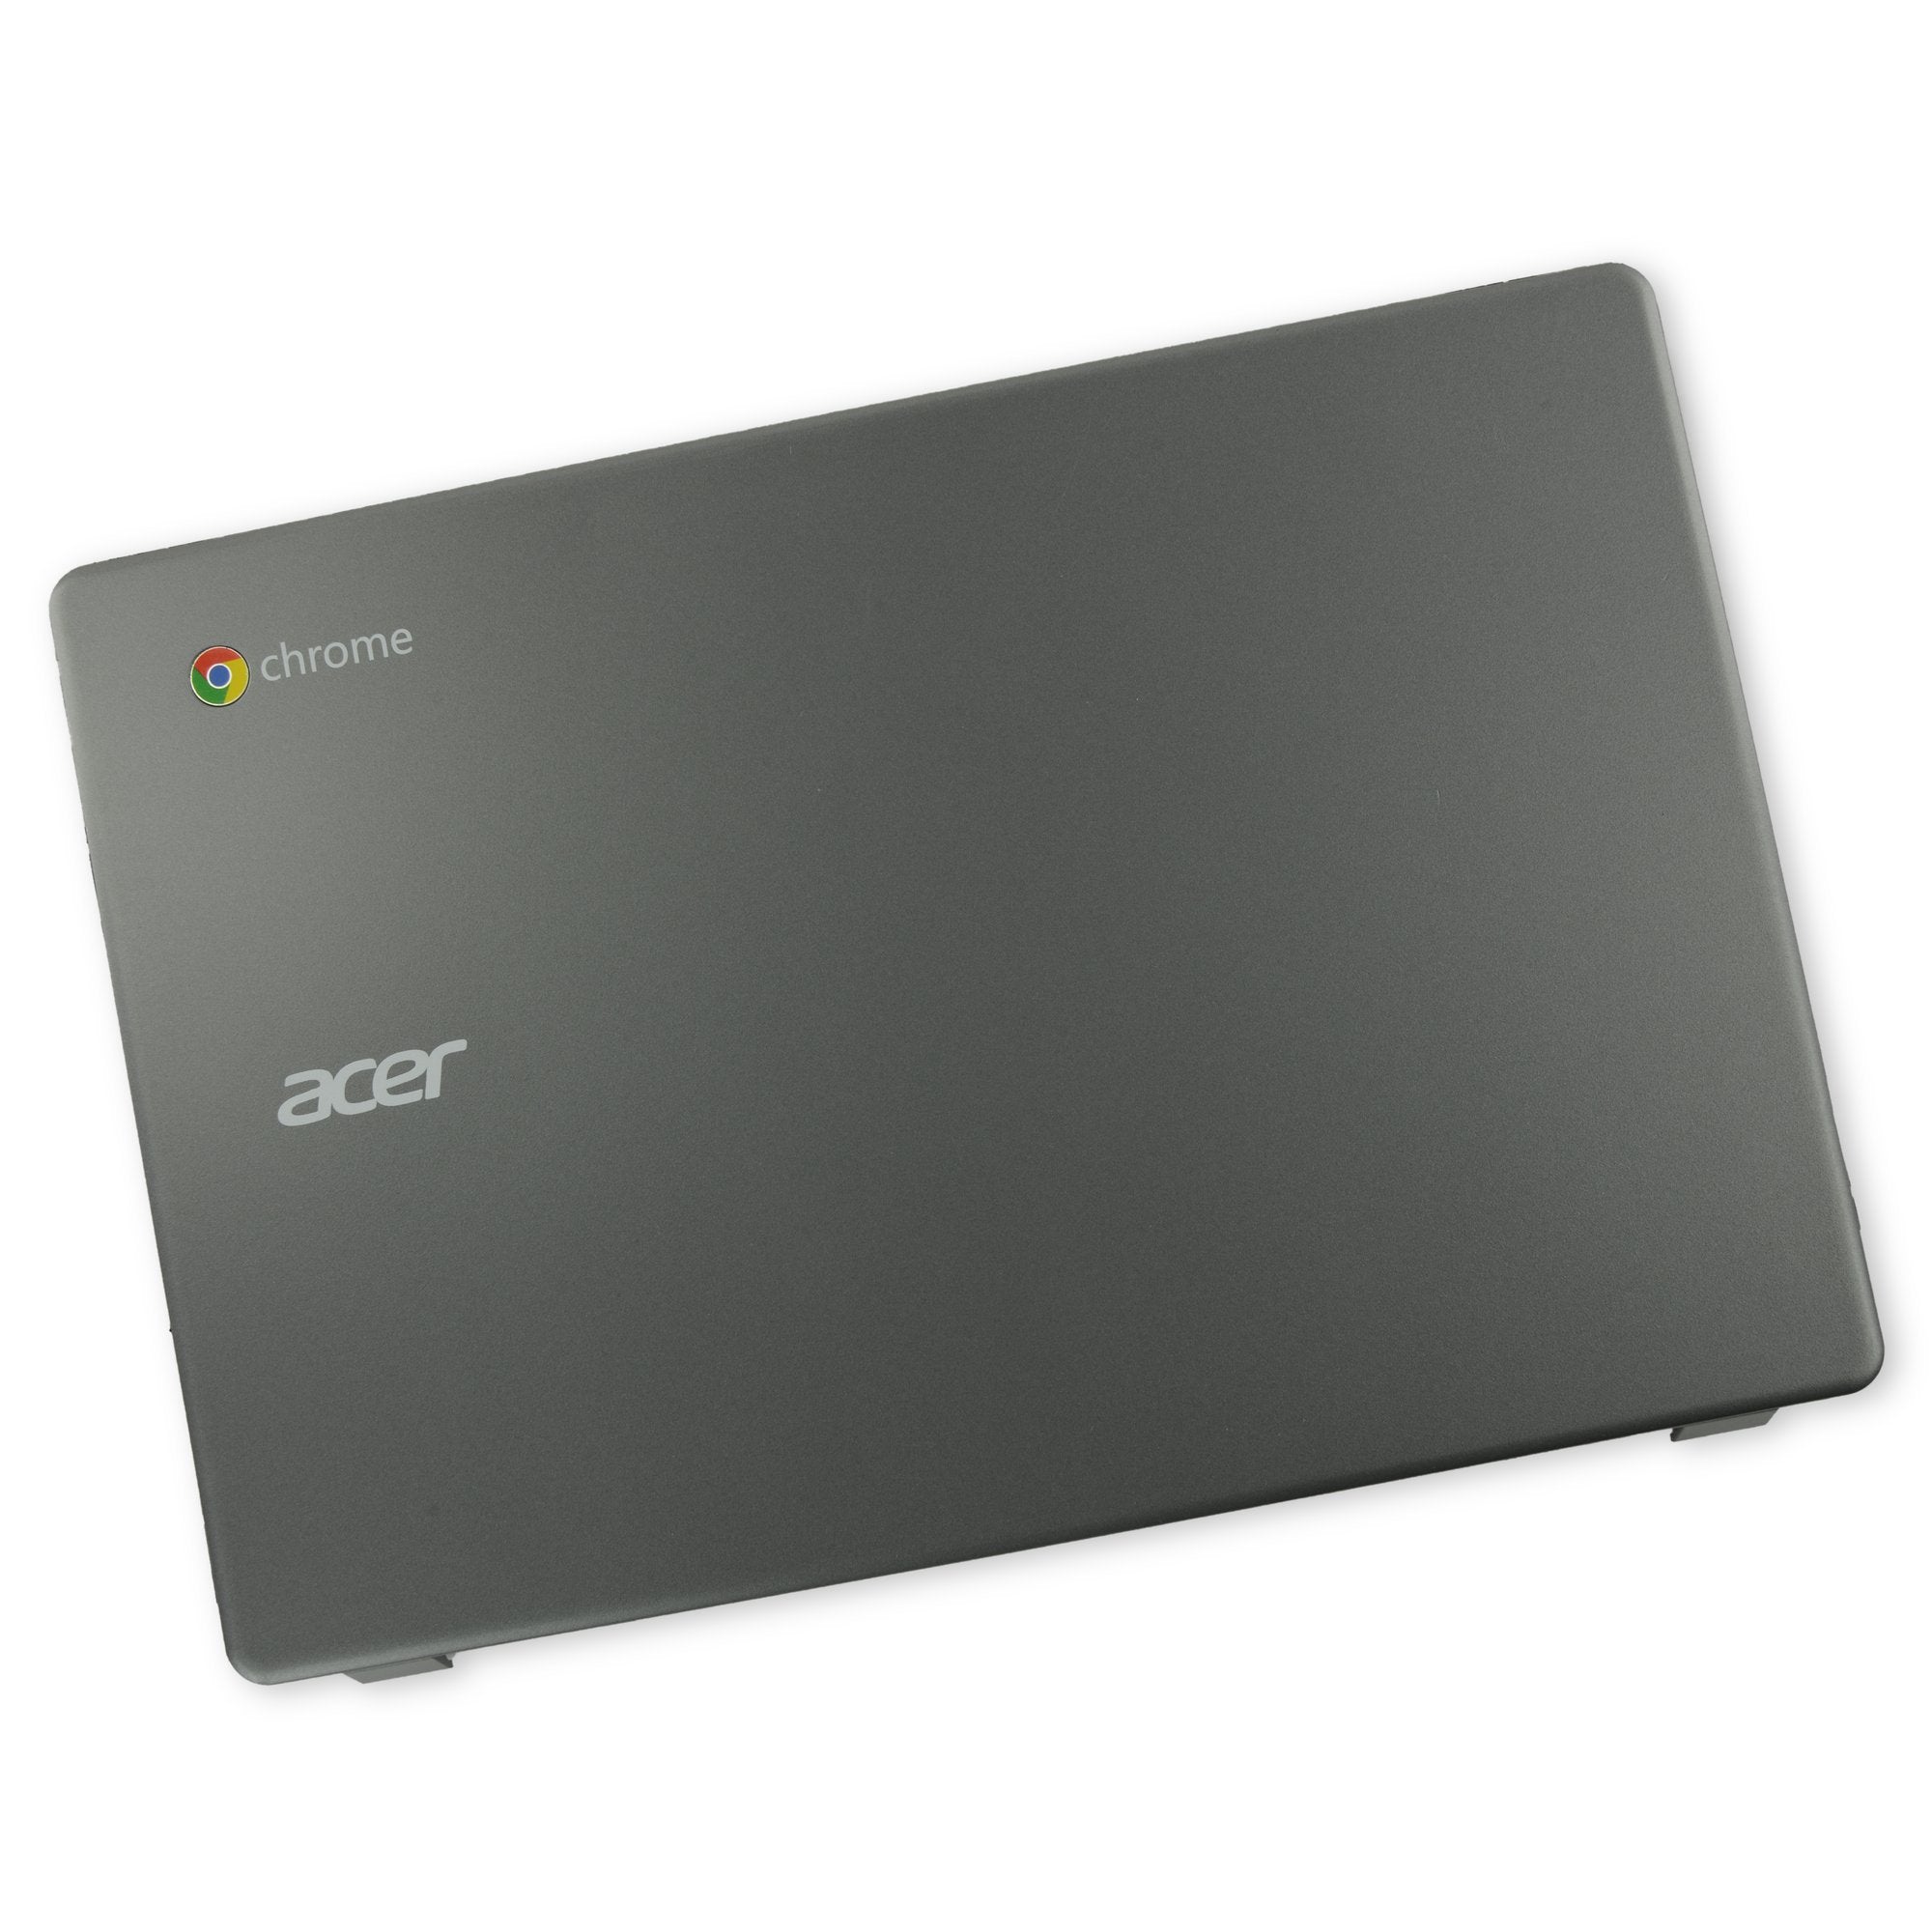 Acer Chromebook C720 LCD Back Cover